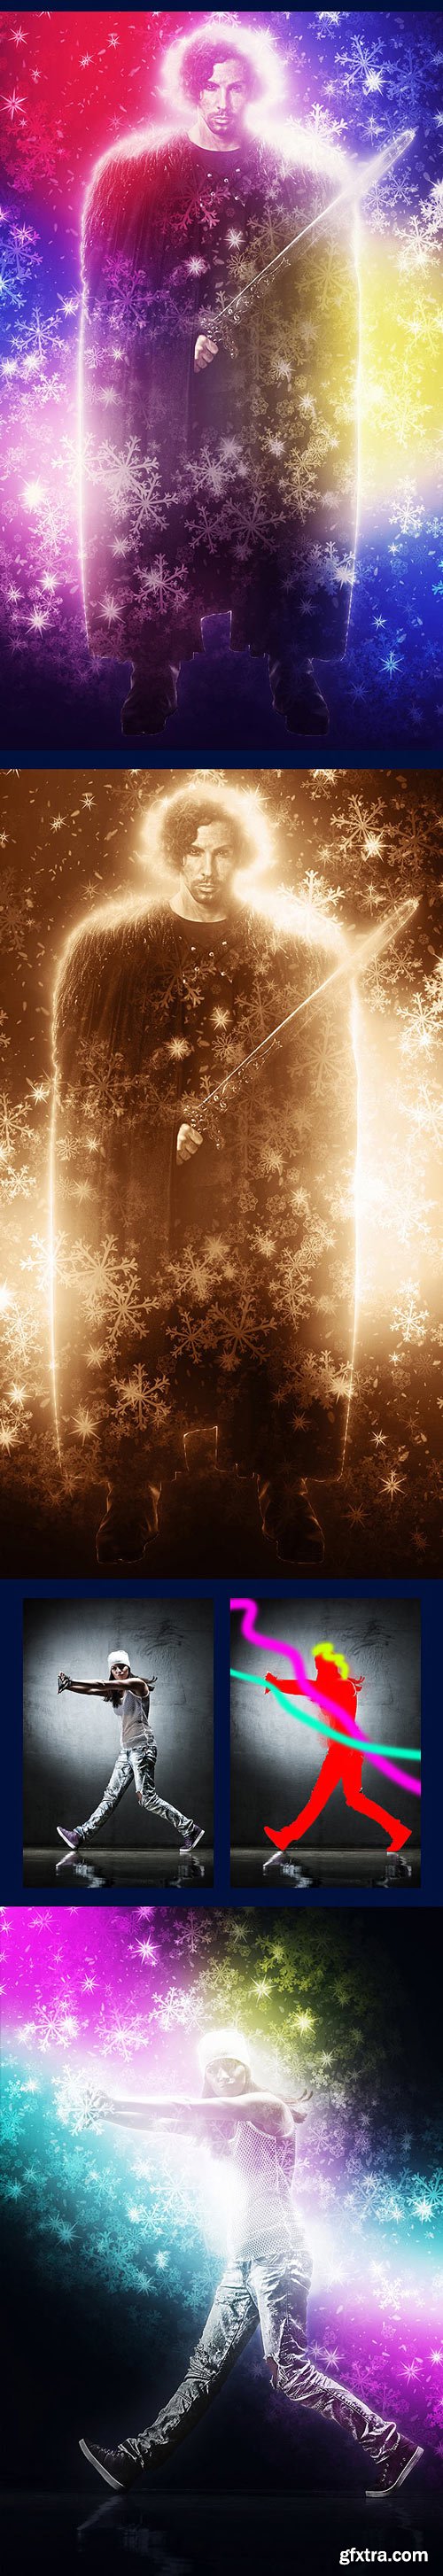 GraphicRiver - Shiny Snowflake - 19152027